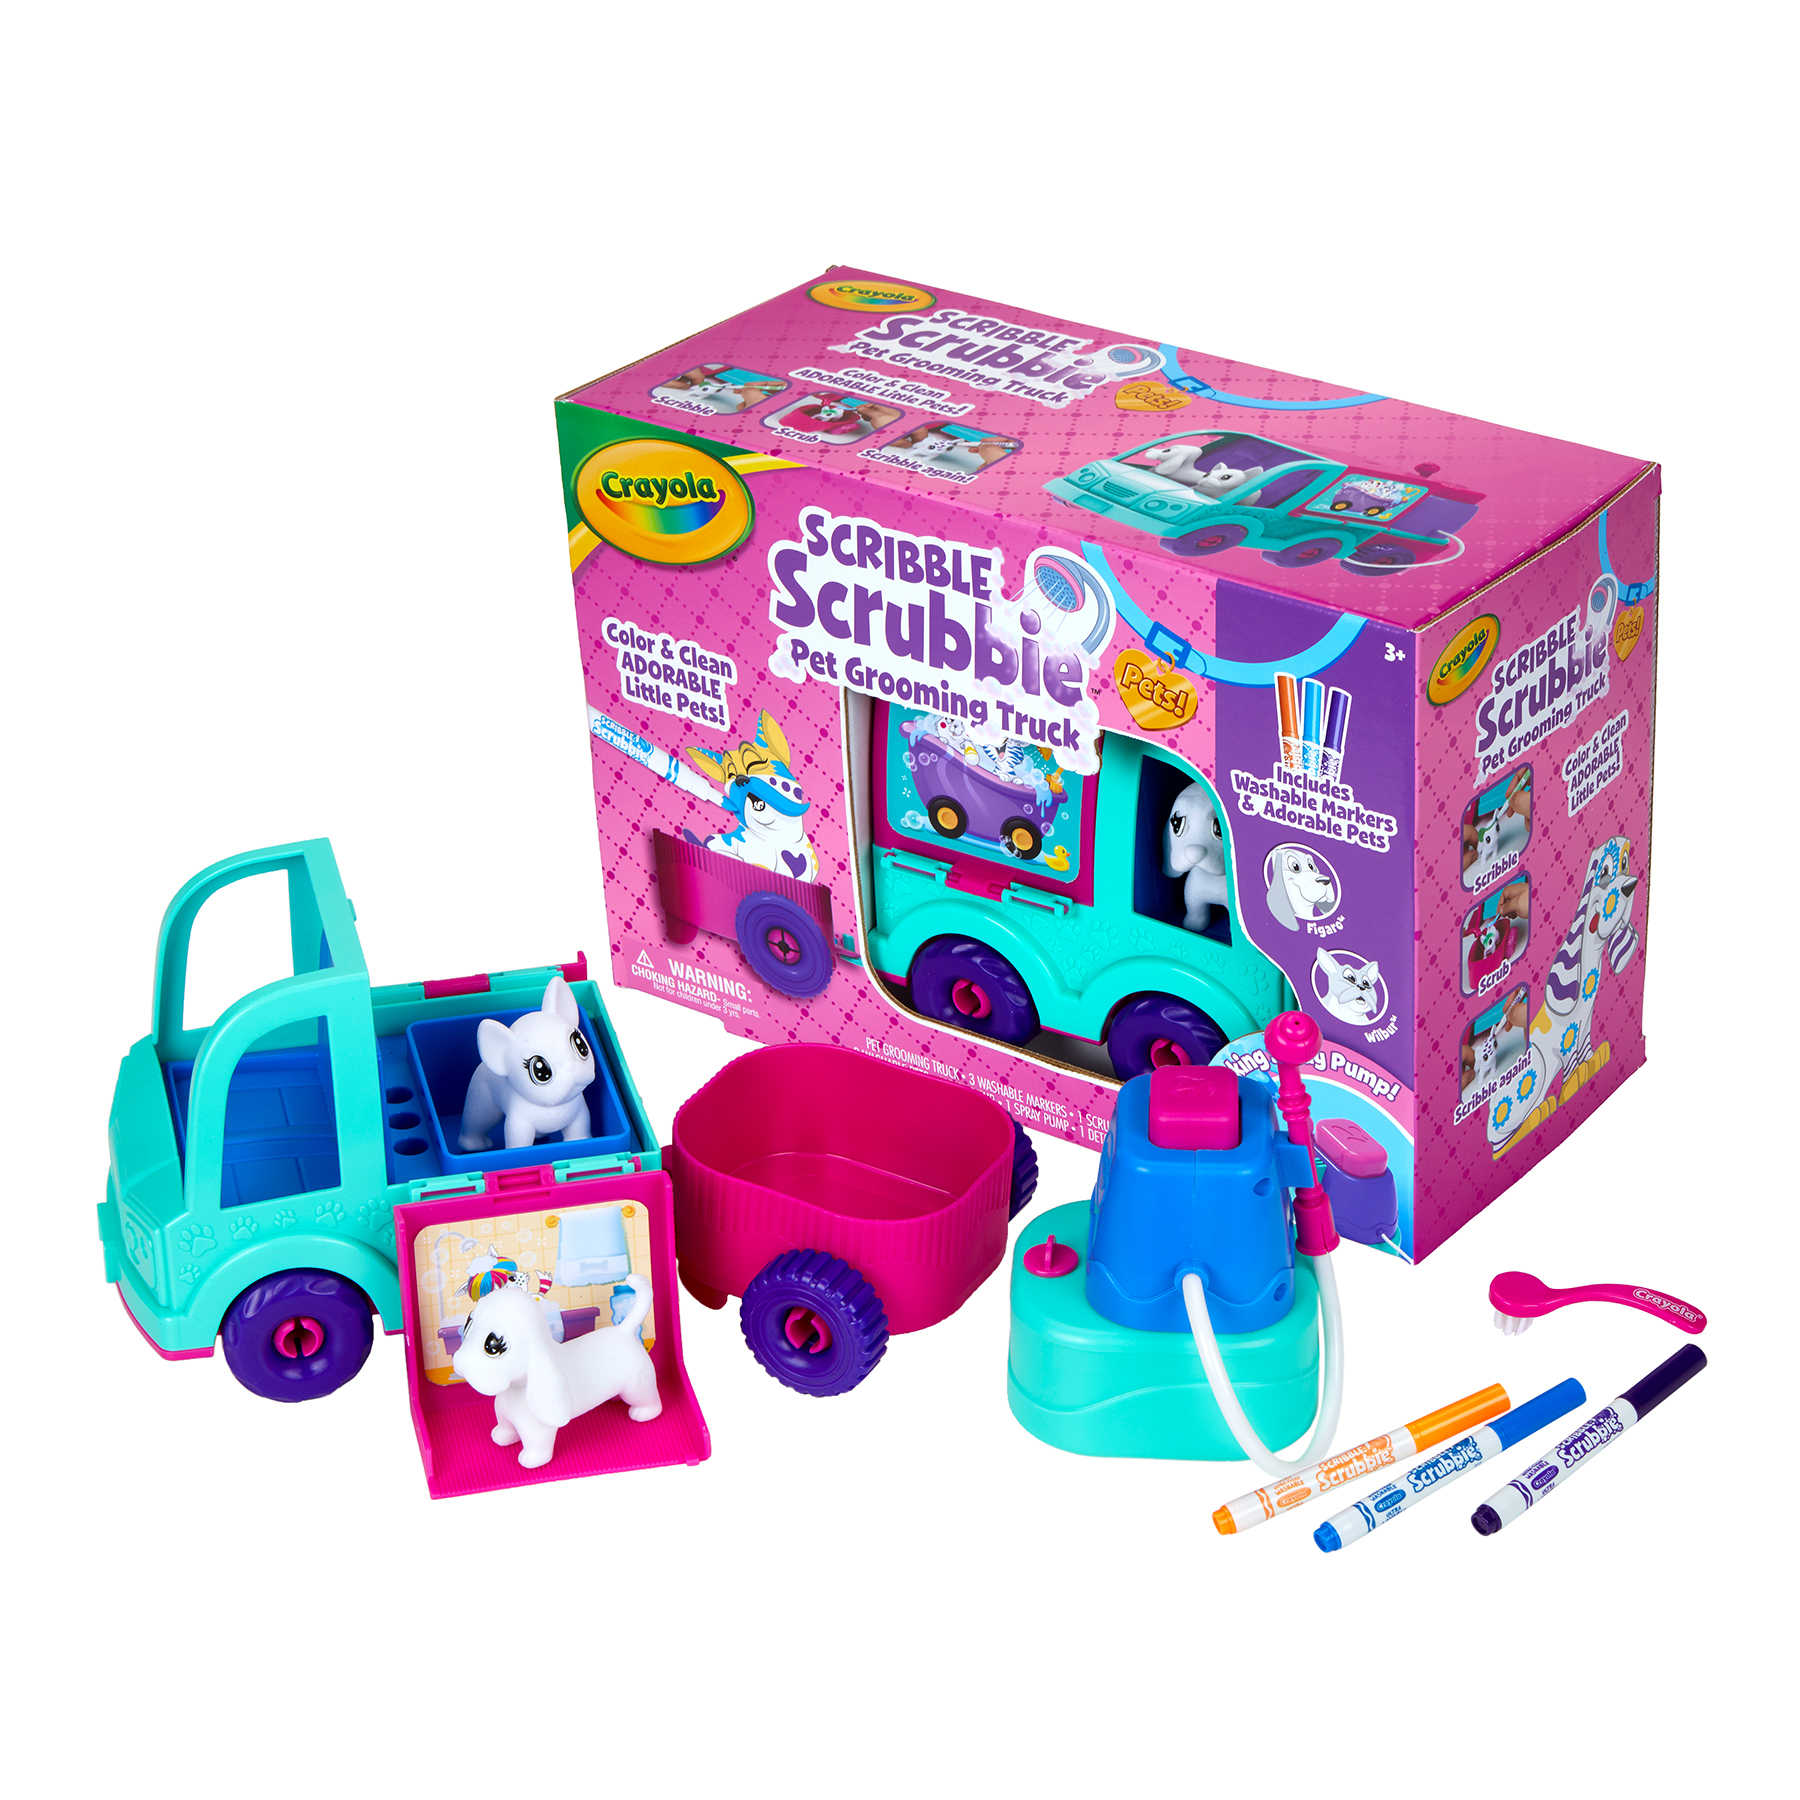 Crayola Scribble Scrubbie Grooming Truck Toy, Easter Basket Stuffers, 10 Pcs, Beginner Child - image 1 of 10